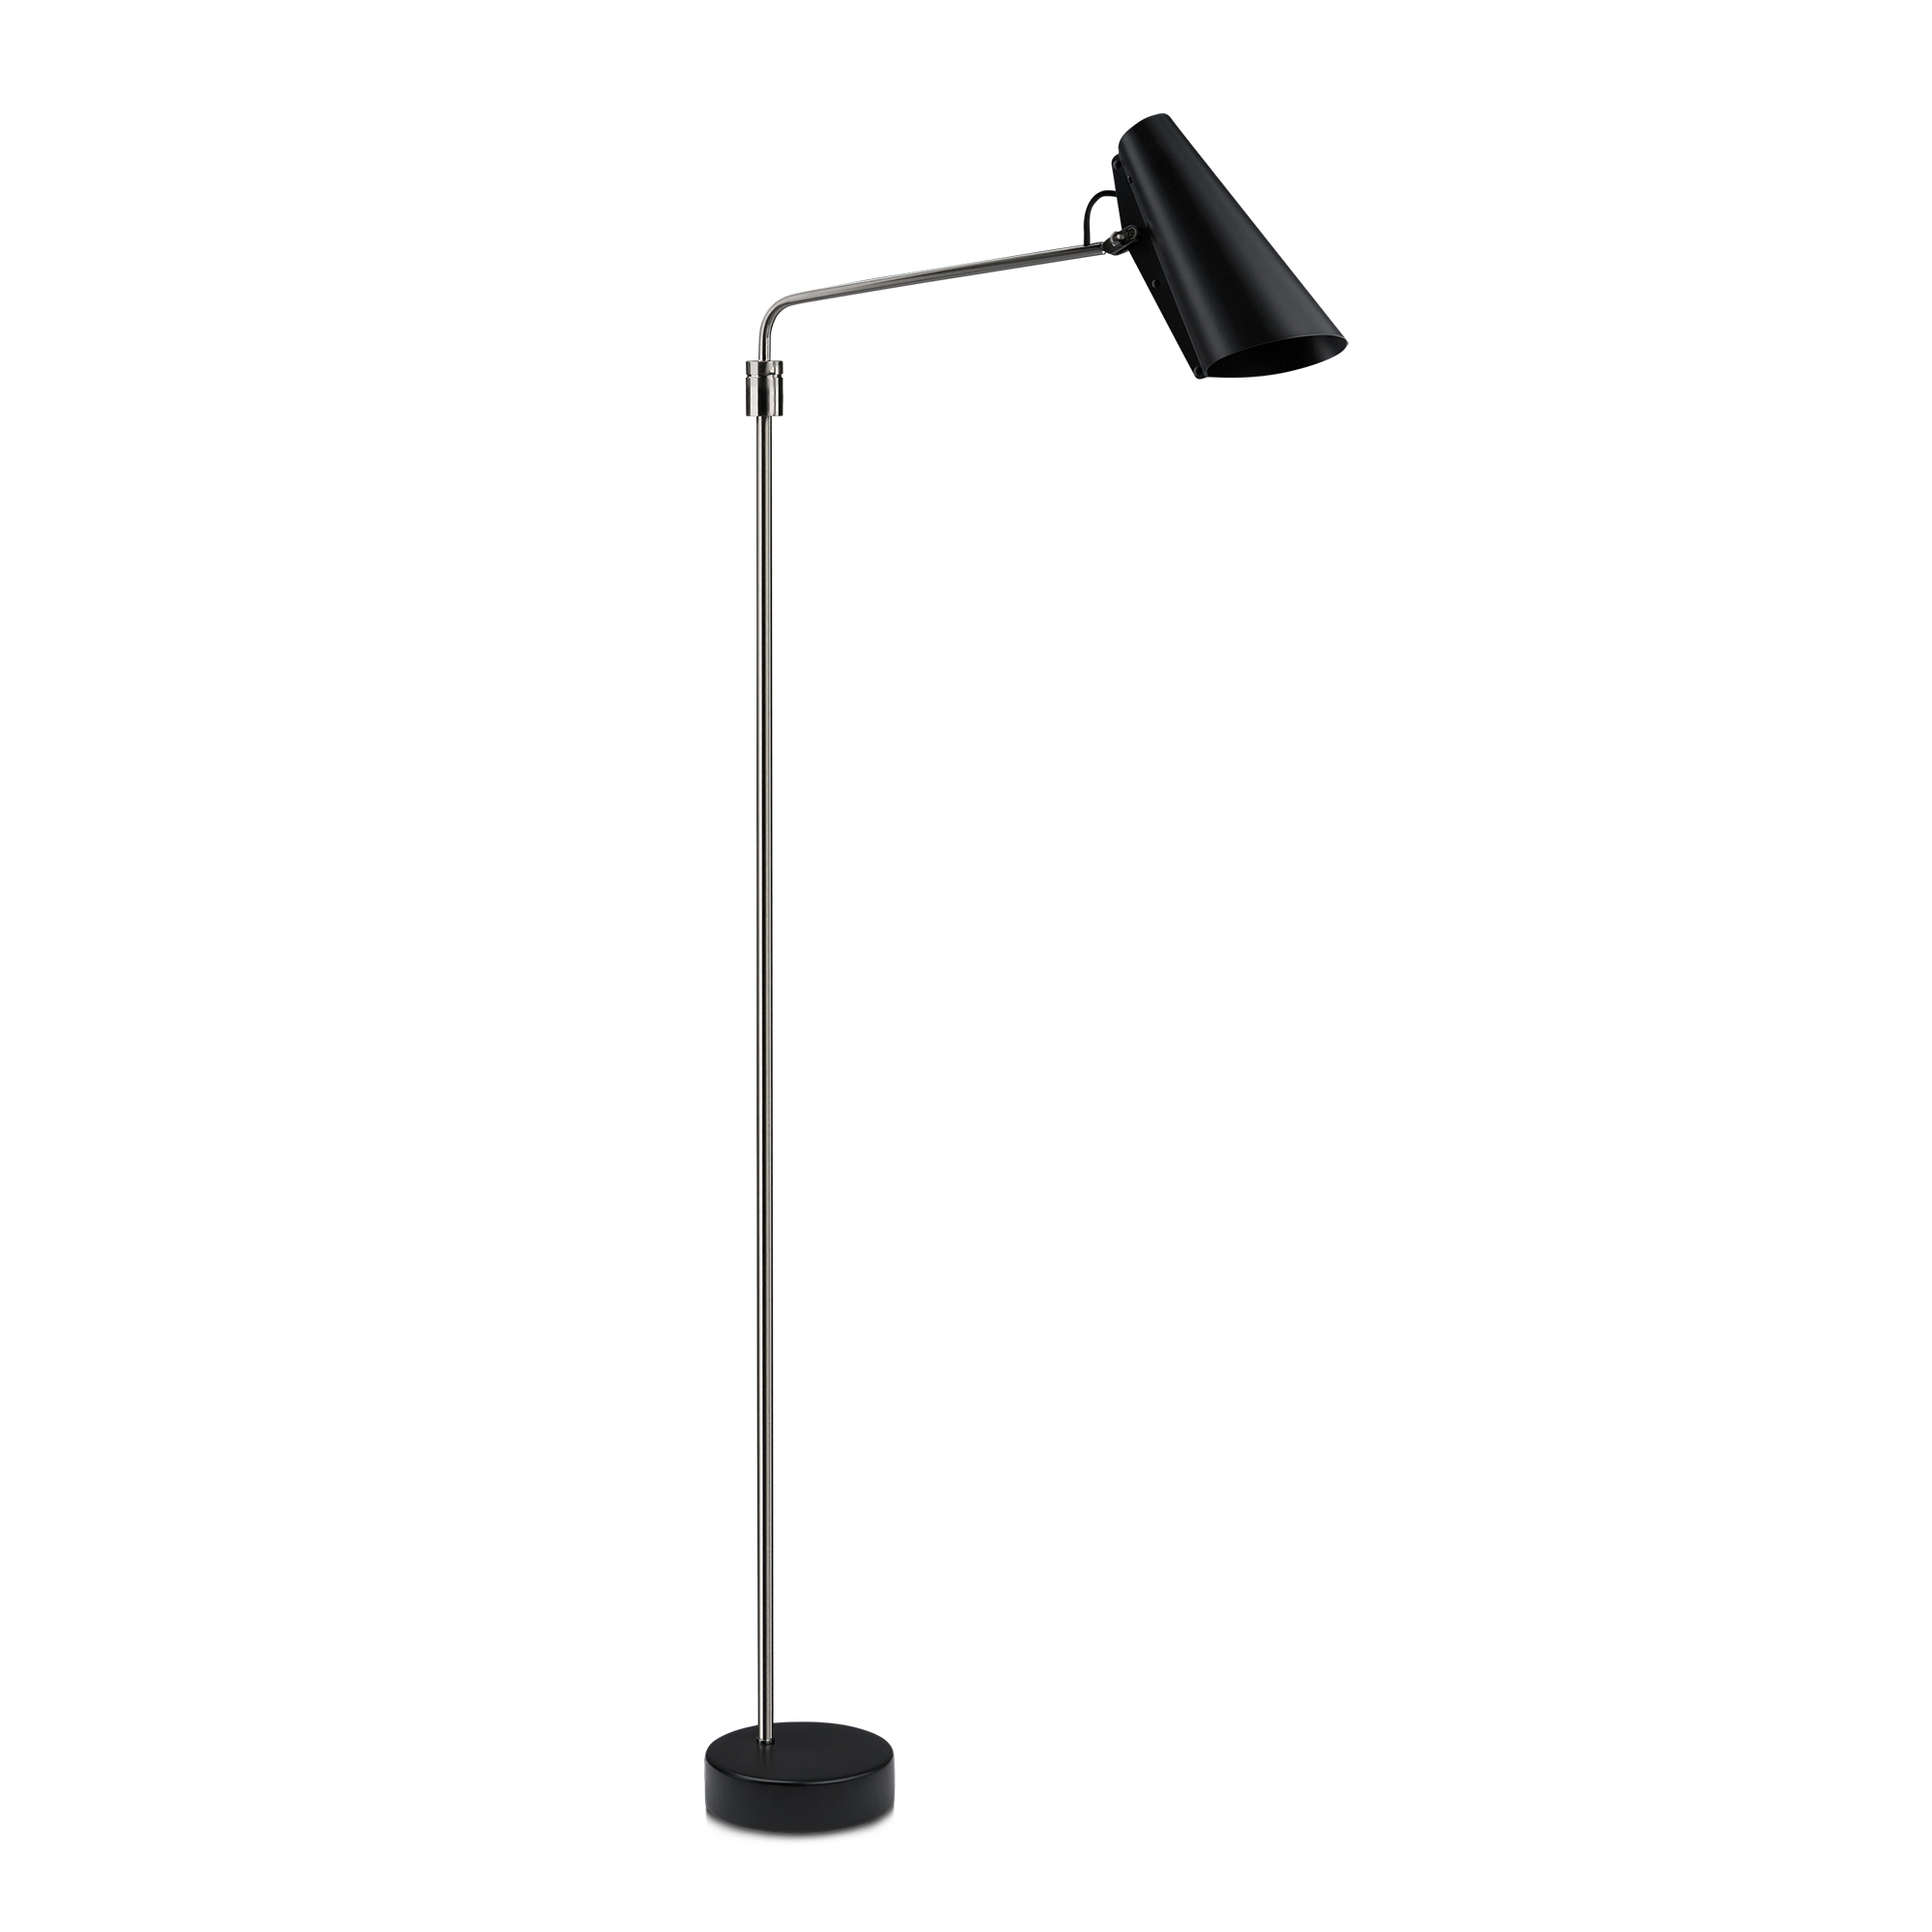 Northern - Birdy Swing Floor Lamp - schwarz, stahl/BxH 50x133cm/schwarzes Kabel